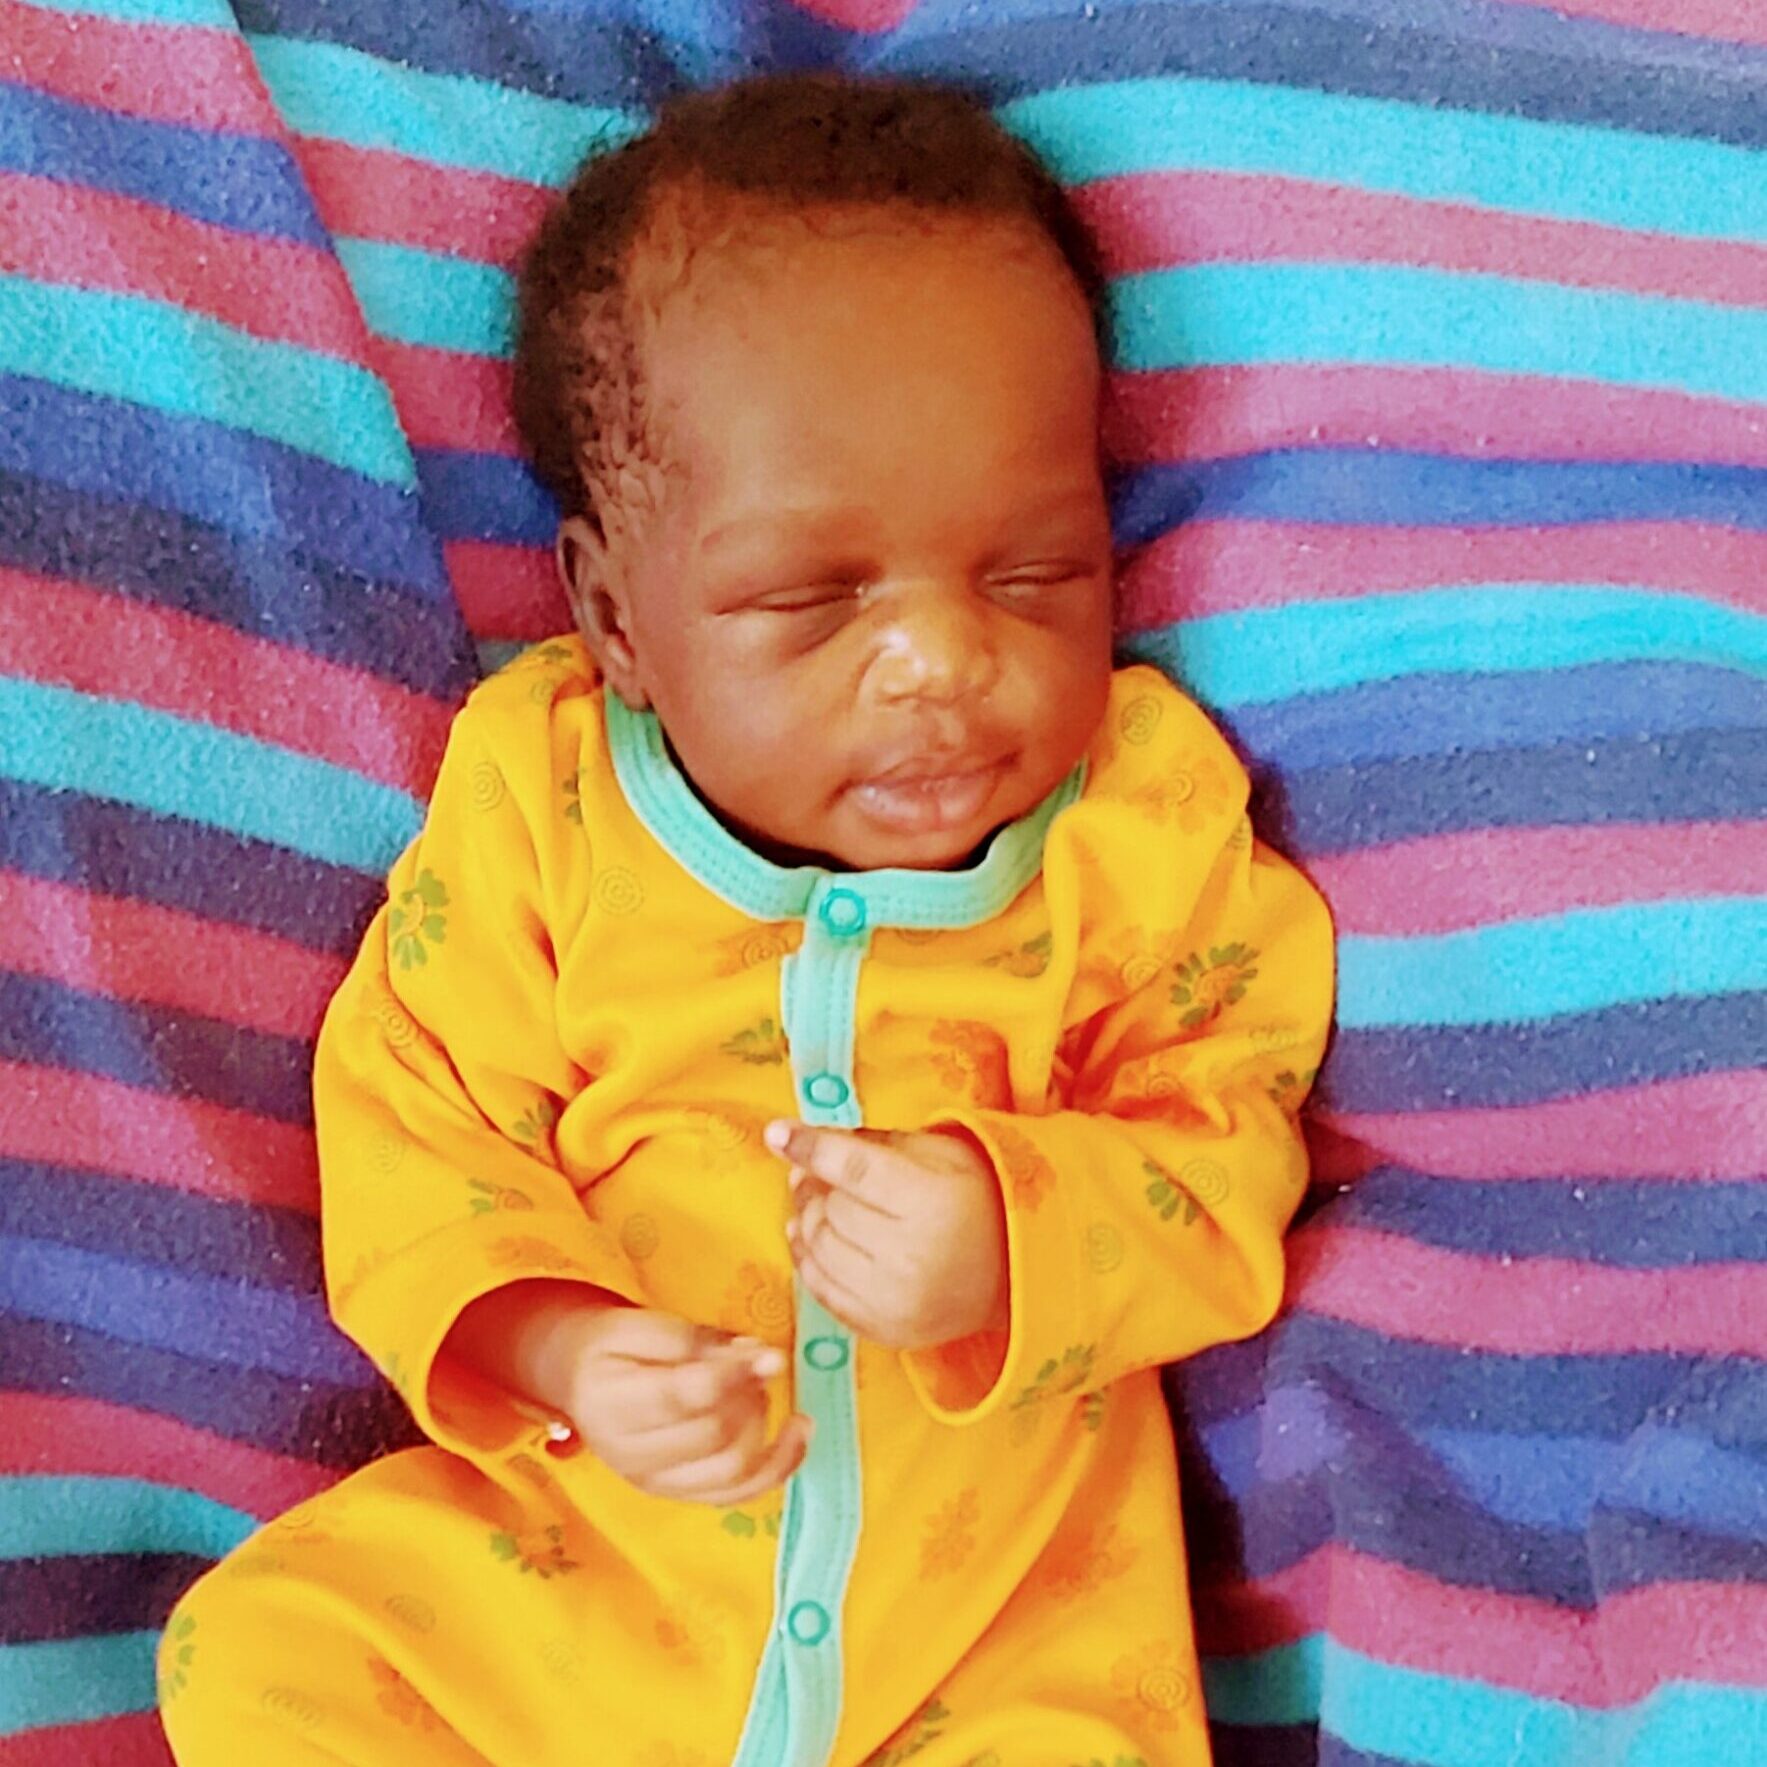 sponsor a child - imani joy rescued baby